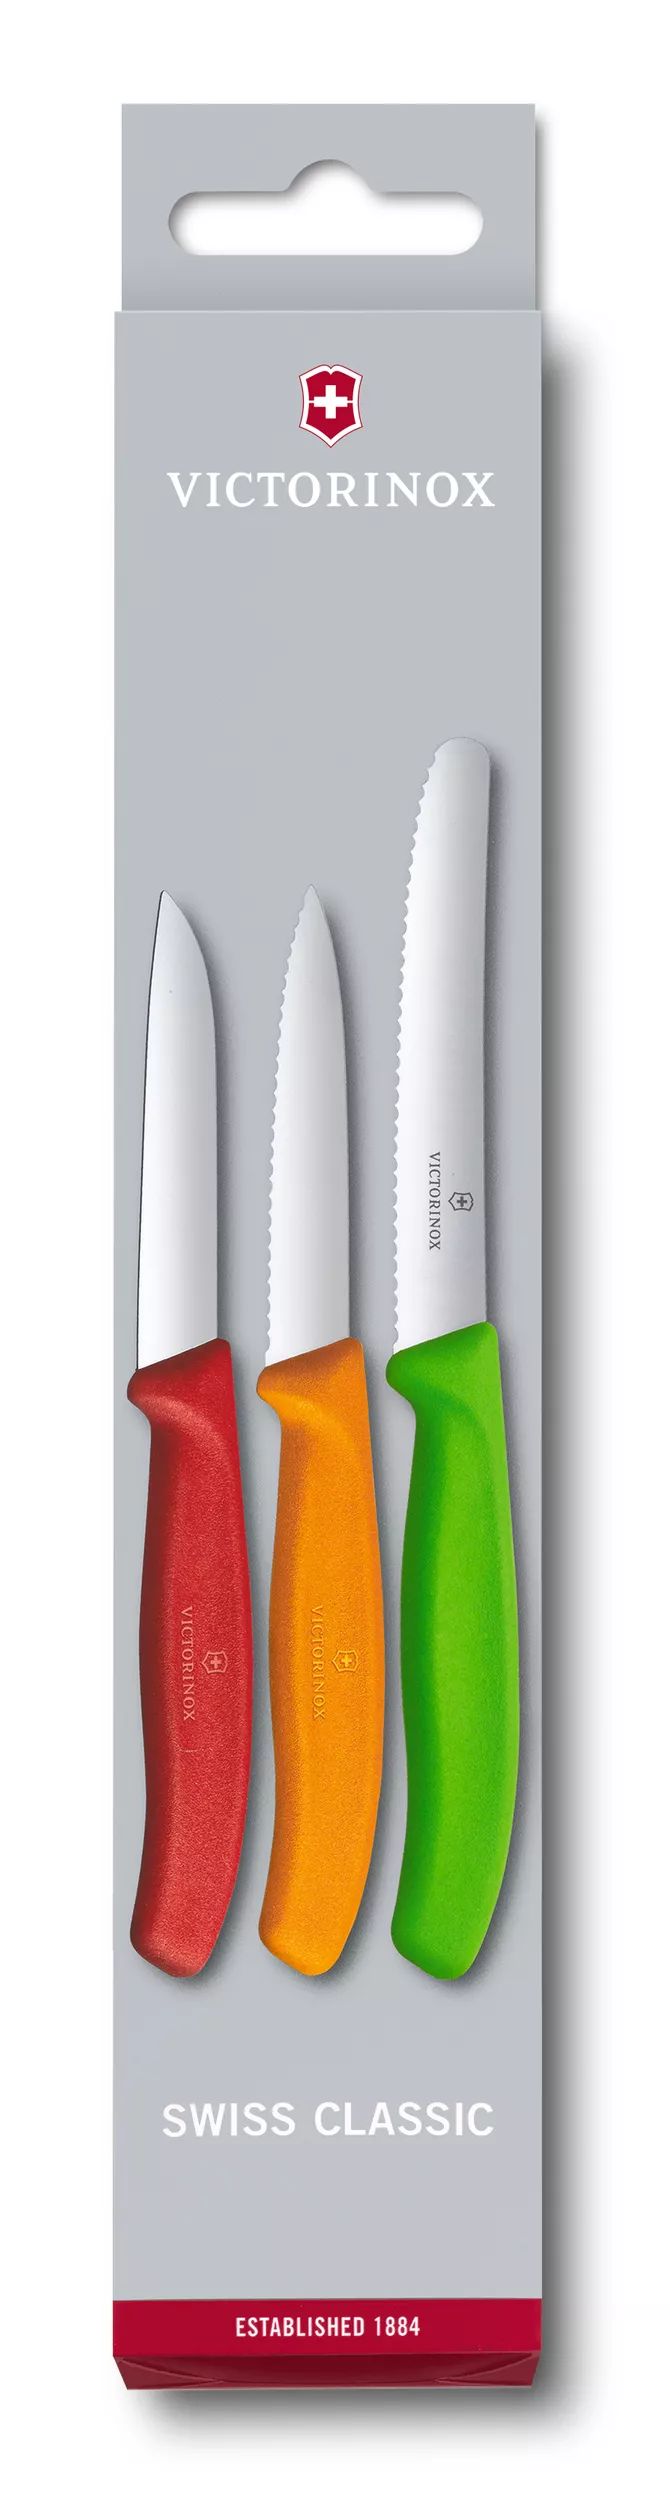 Swiss Classic 削皮刀具組，3件裝-6.7116.32